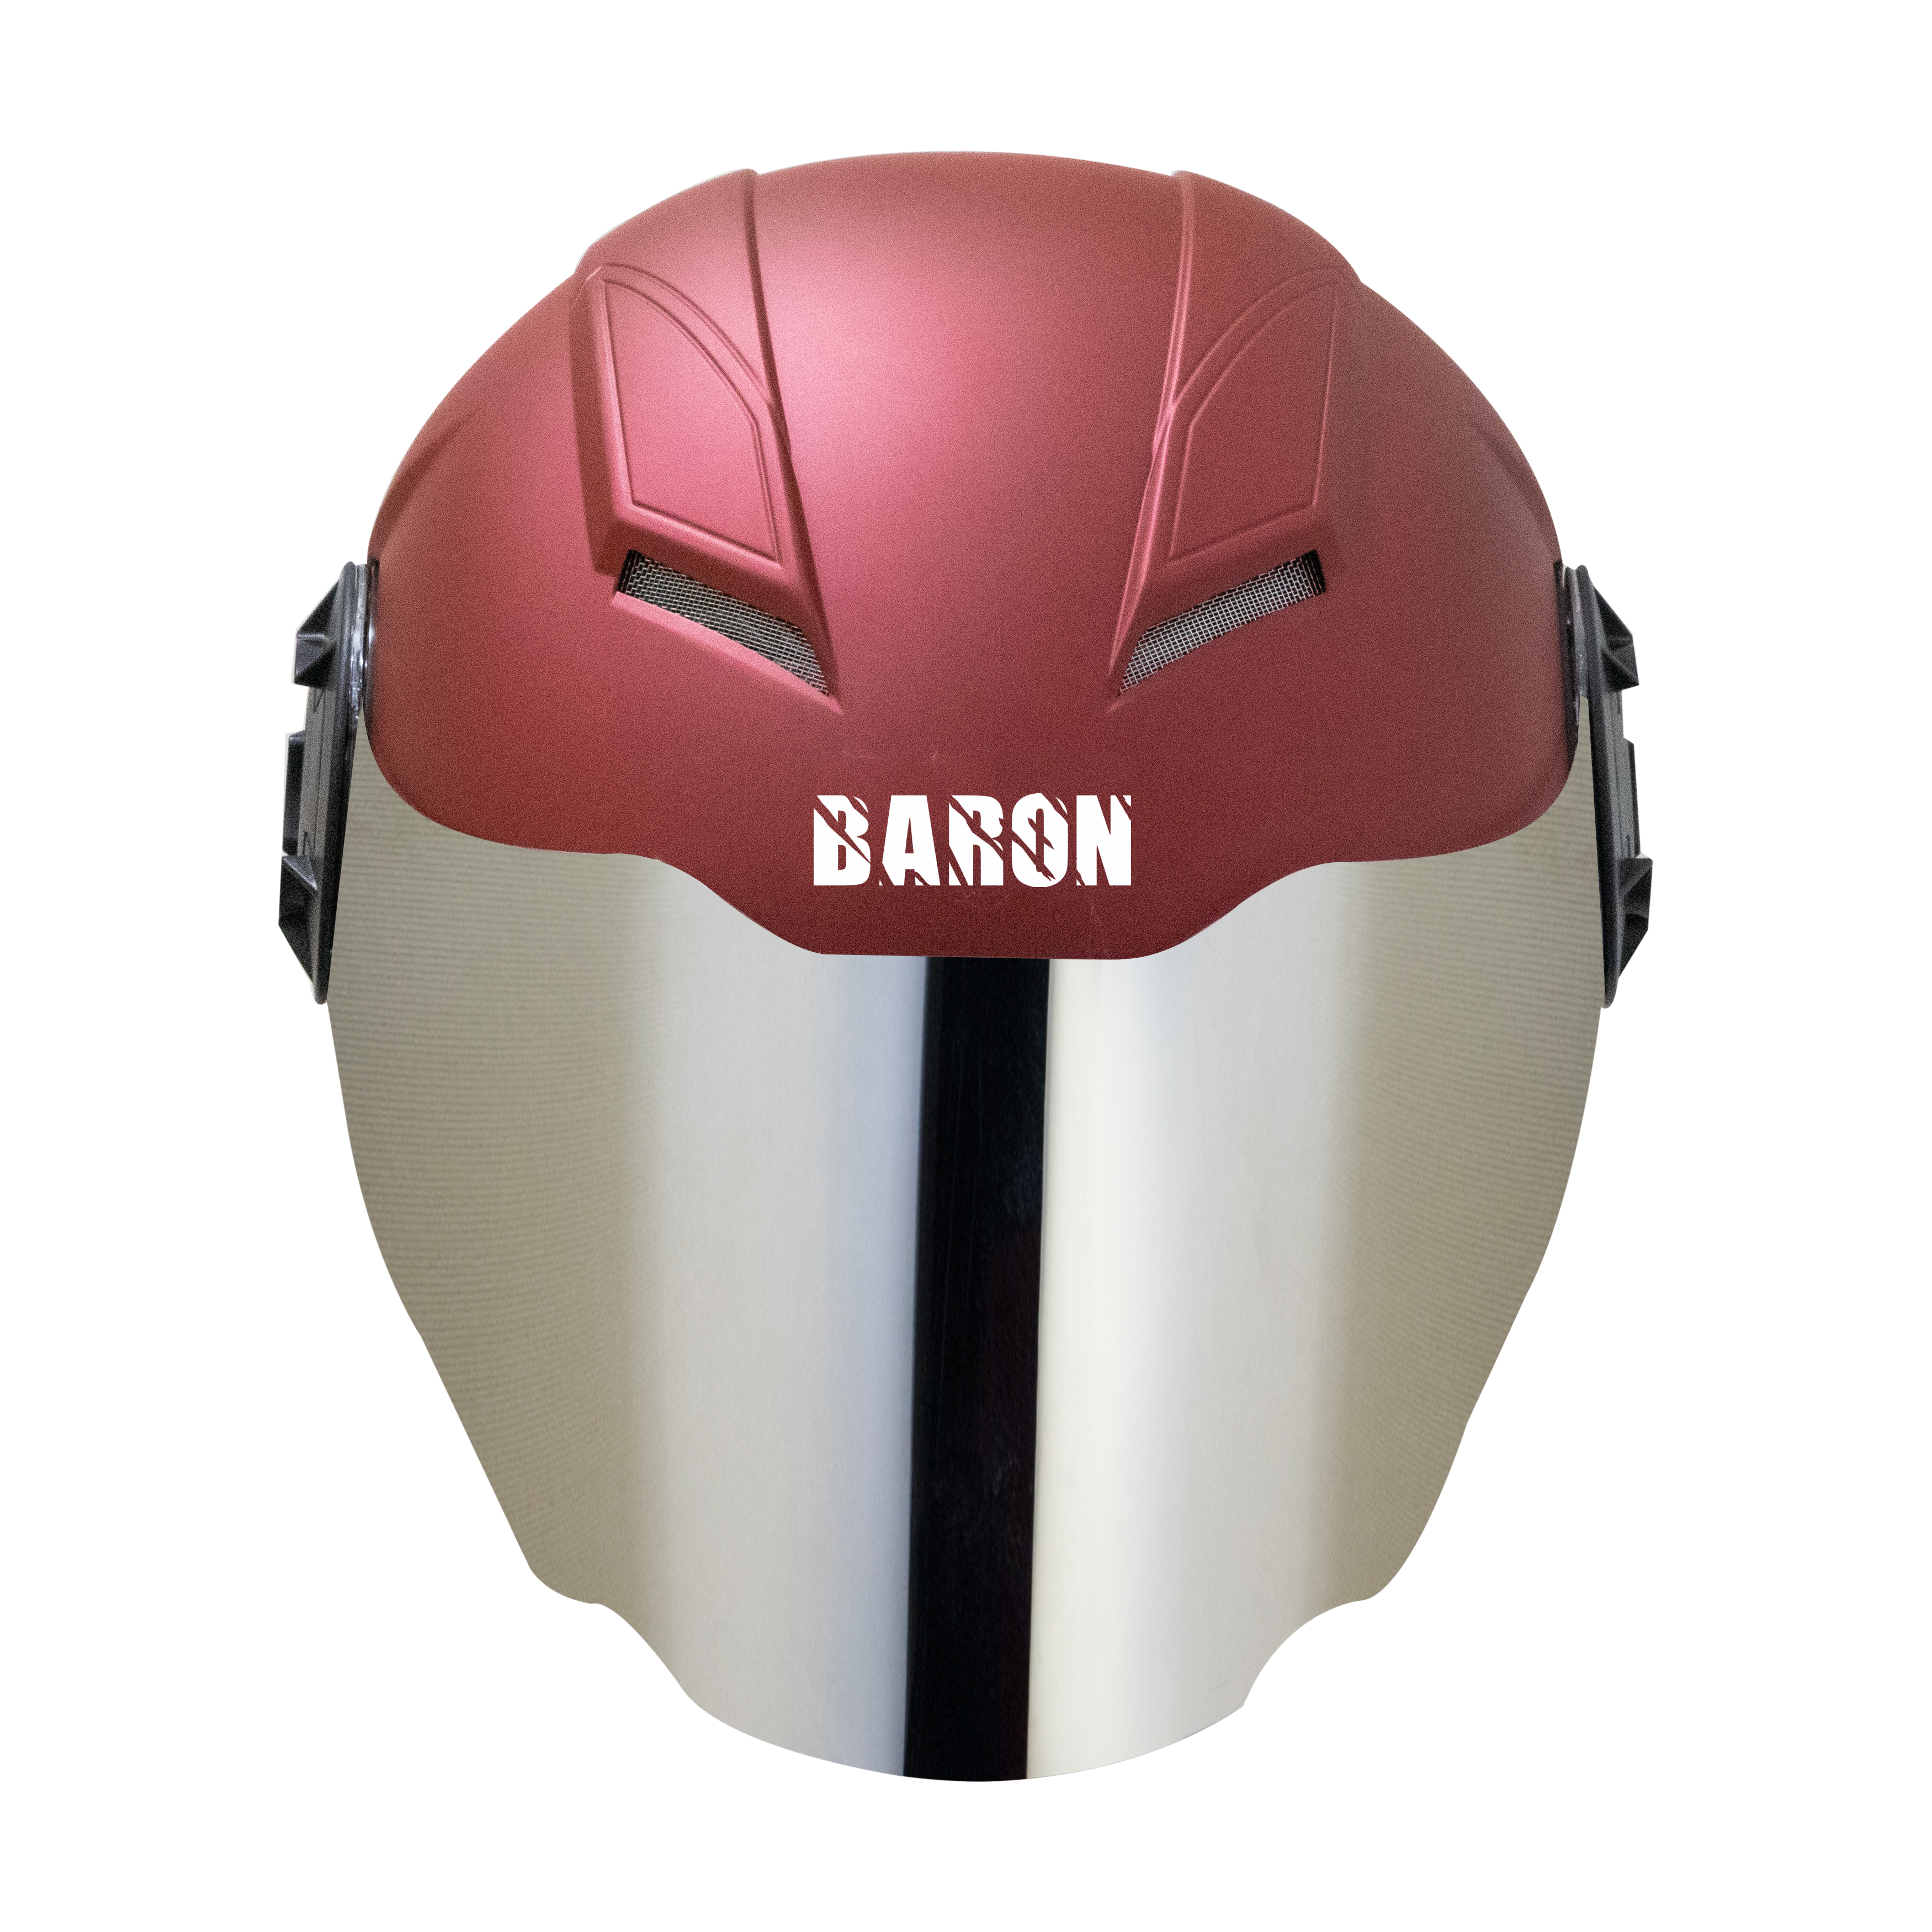 Steelbird Baron Open Face Helmet , ISI Certified Helmet (Matt Maroon With Chrome Silver Visor)